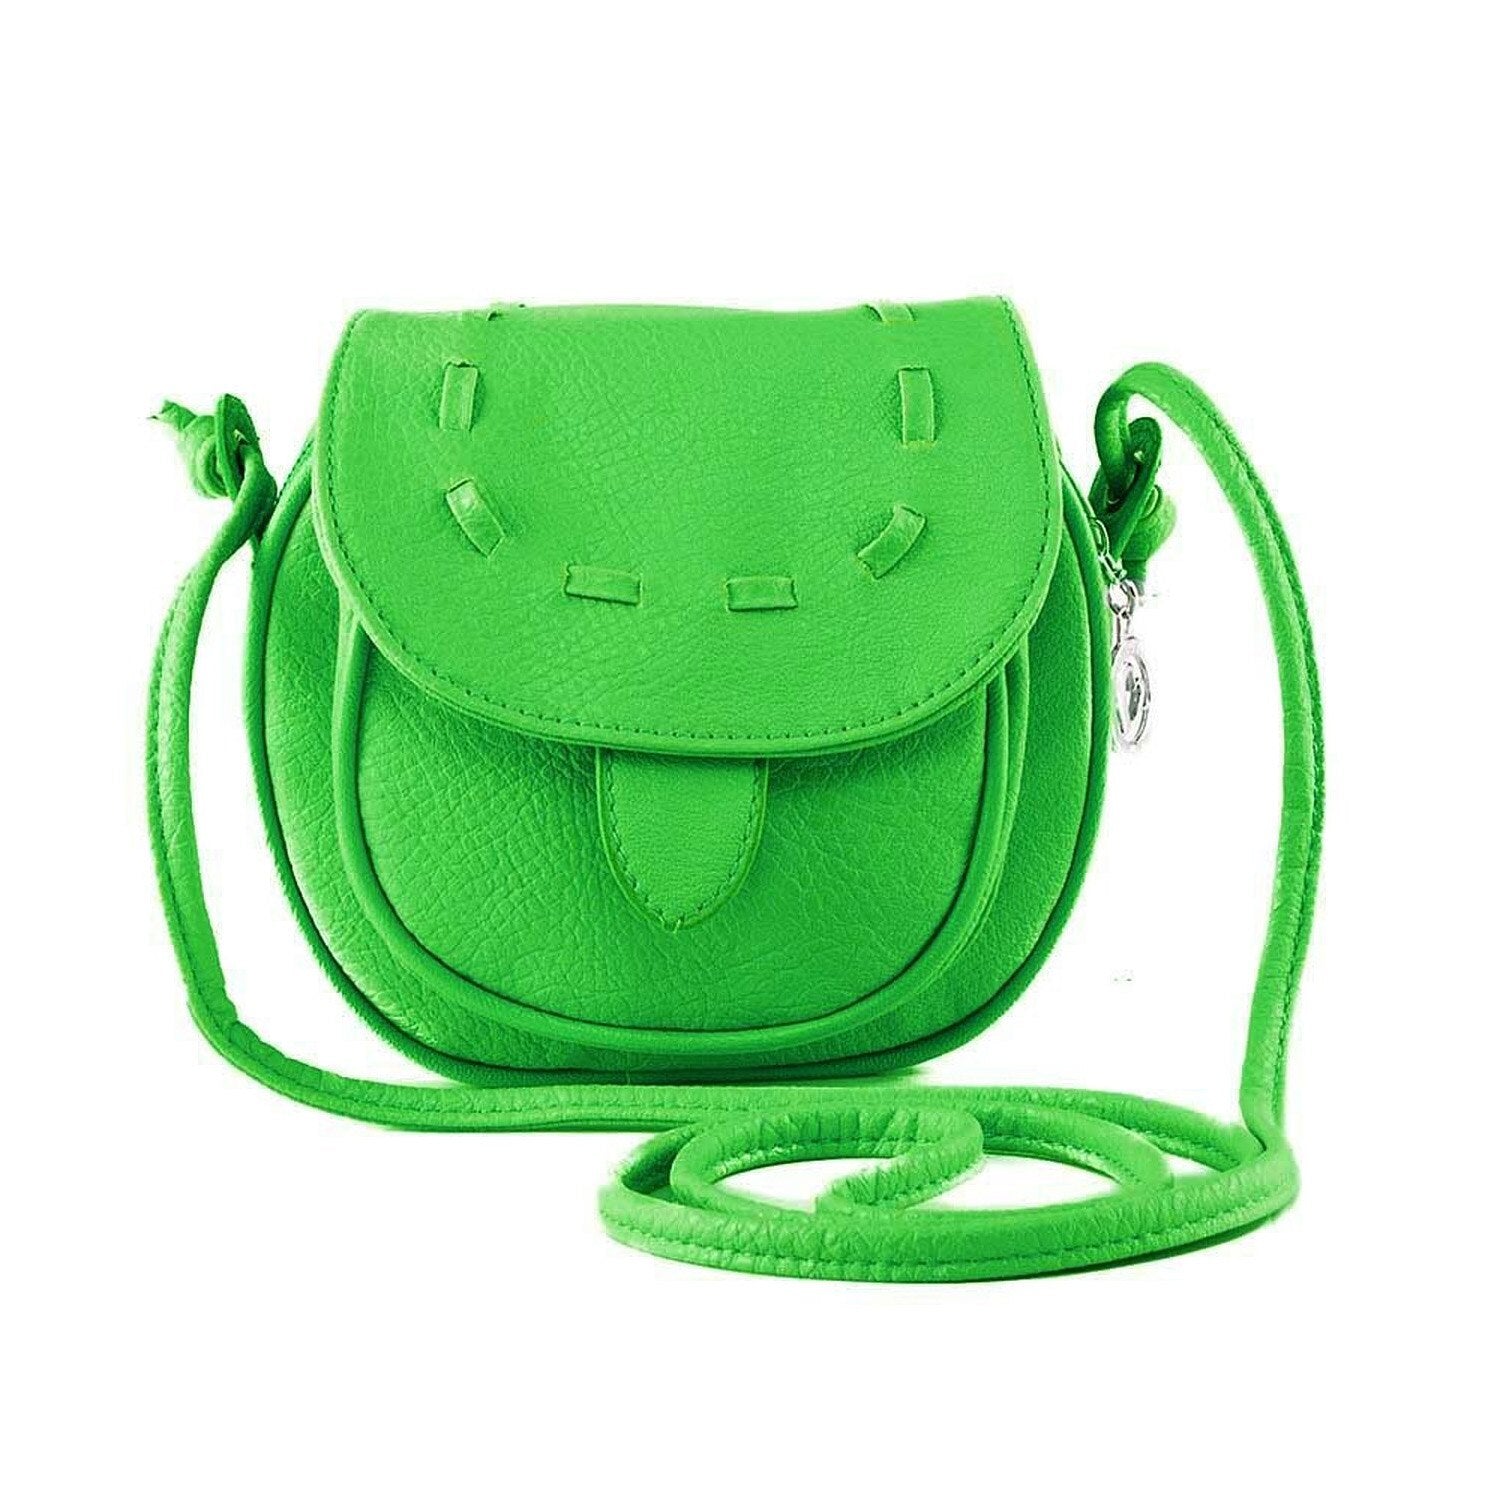 Hot New Fashion Mini Travel bag Shoulder bag PU Leather Messenger Bag Ladies Drawstring Bag (Black) - ebowsos